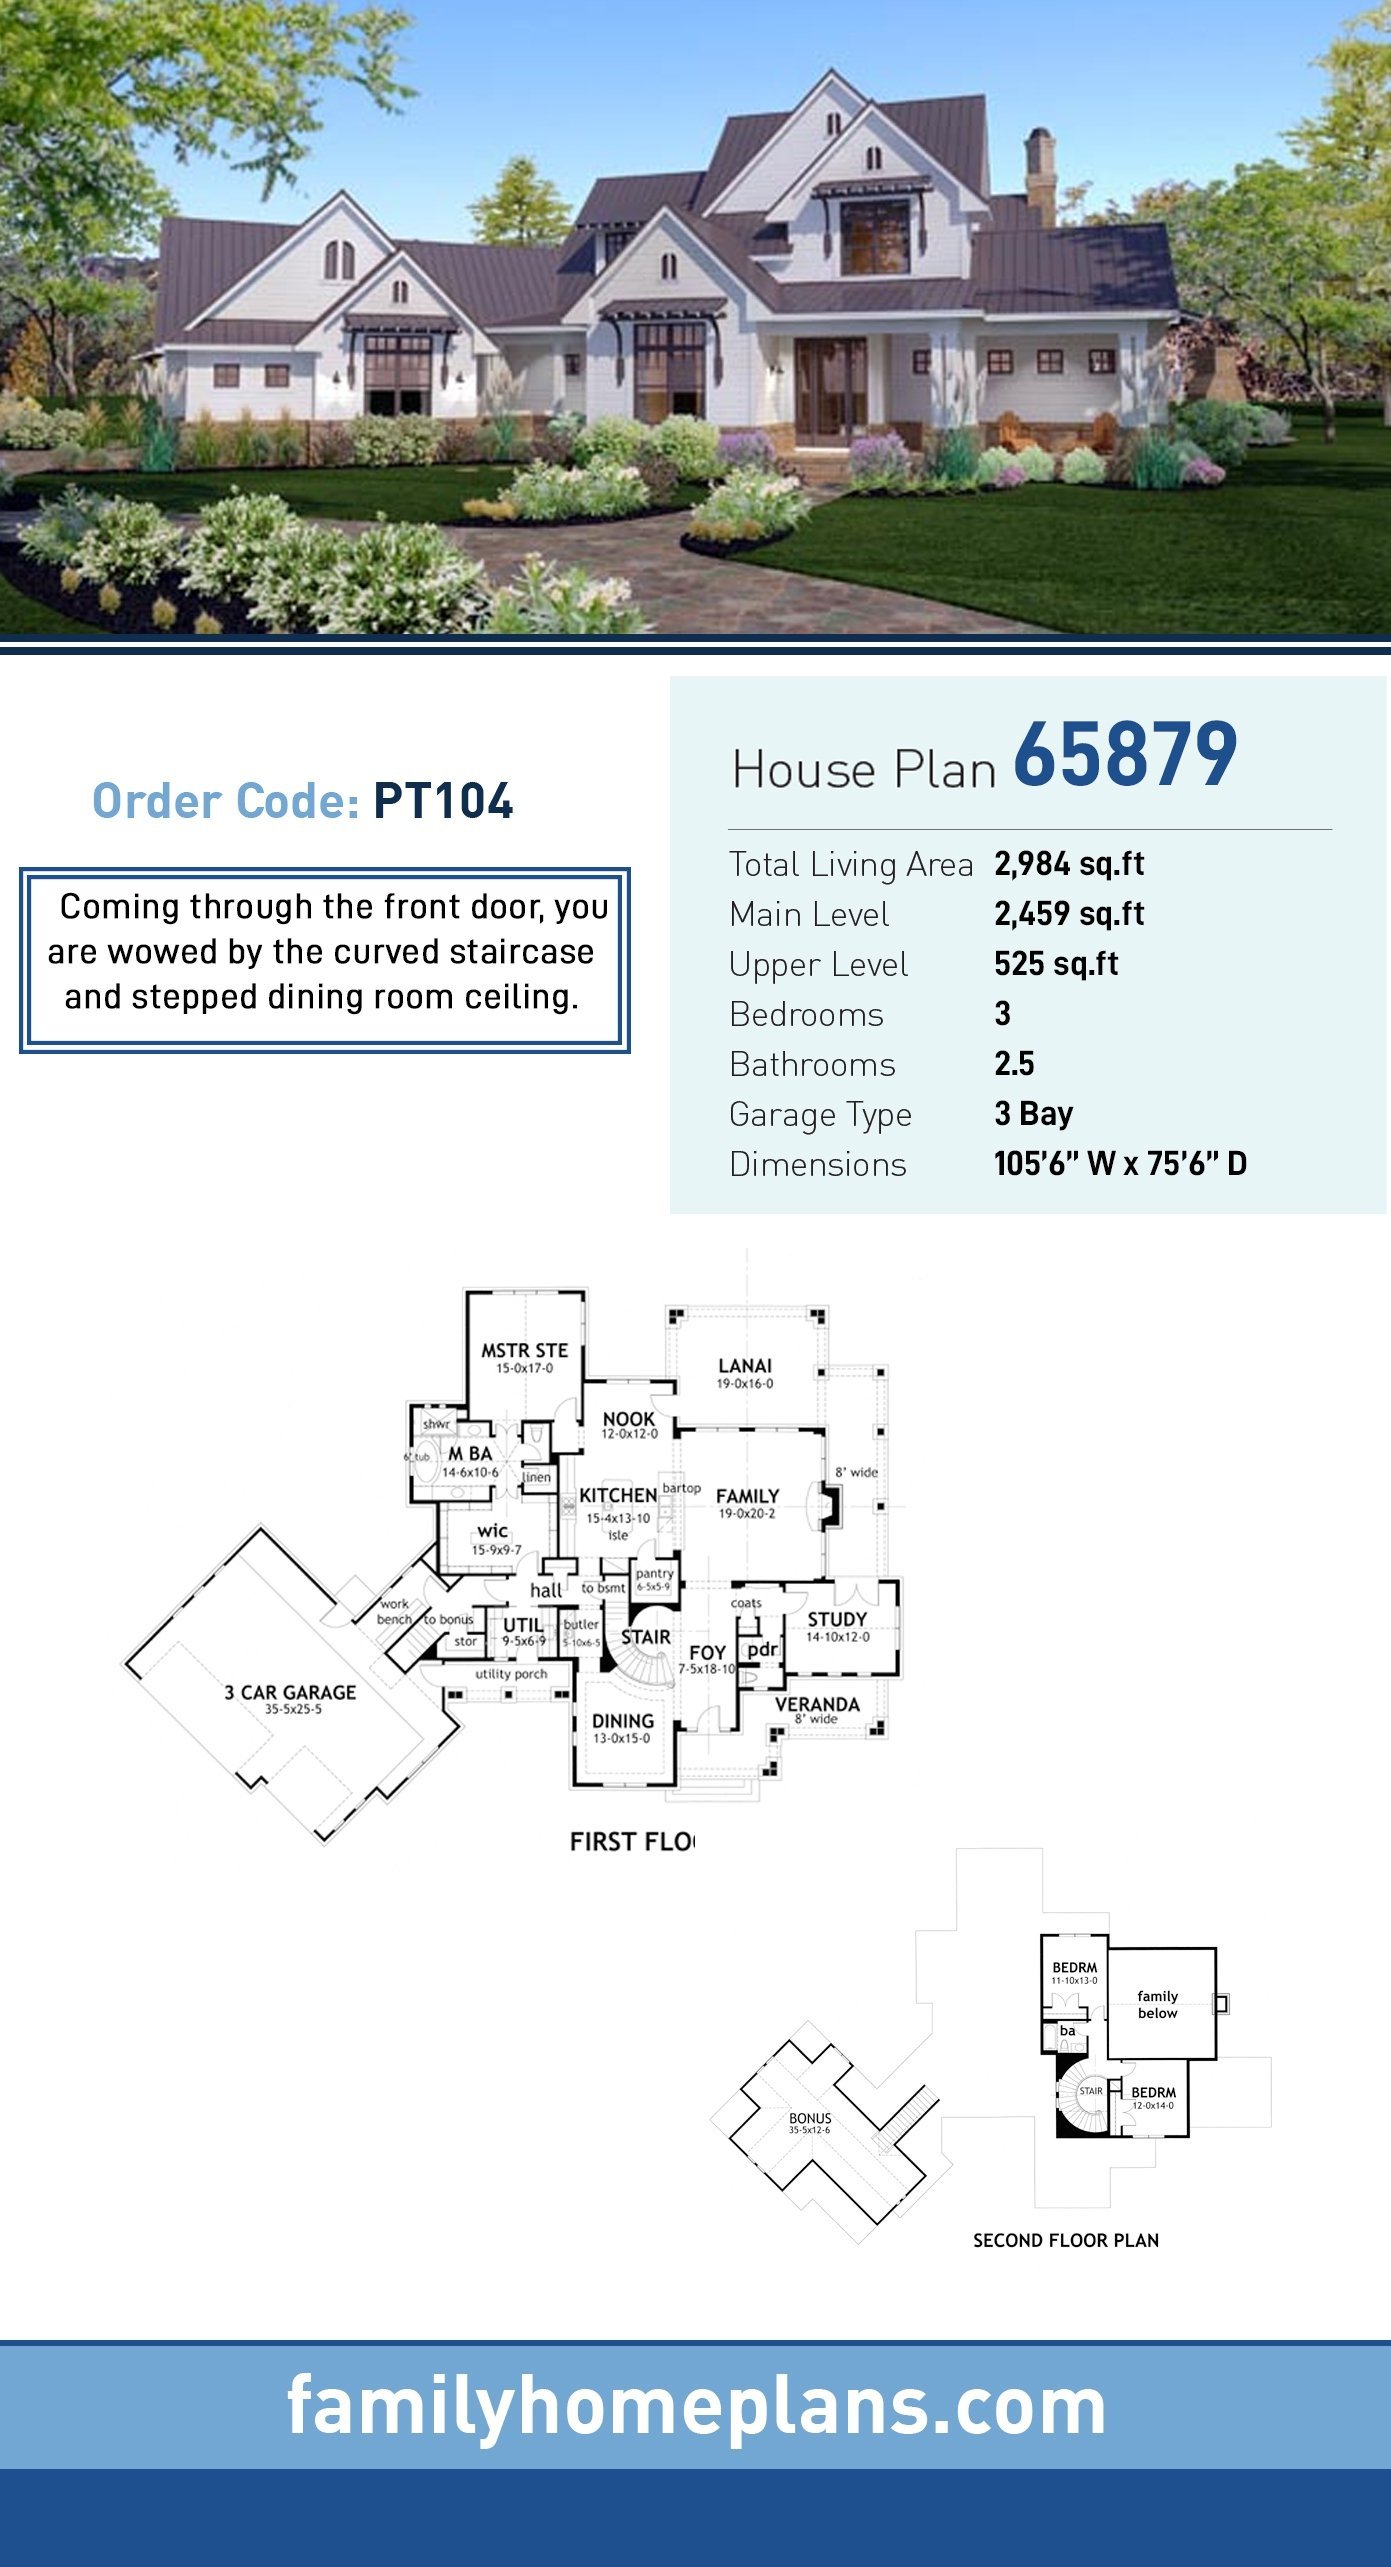 House Plan 65879